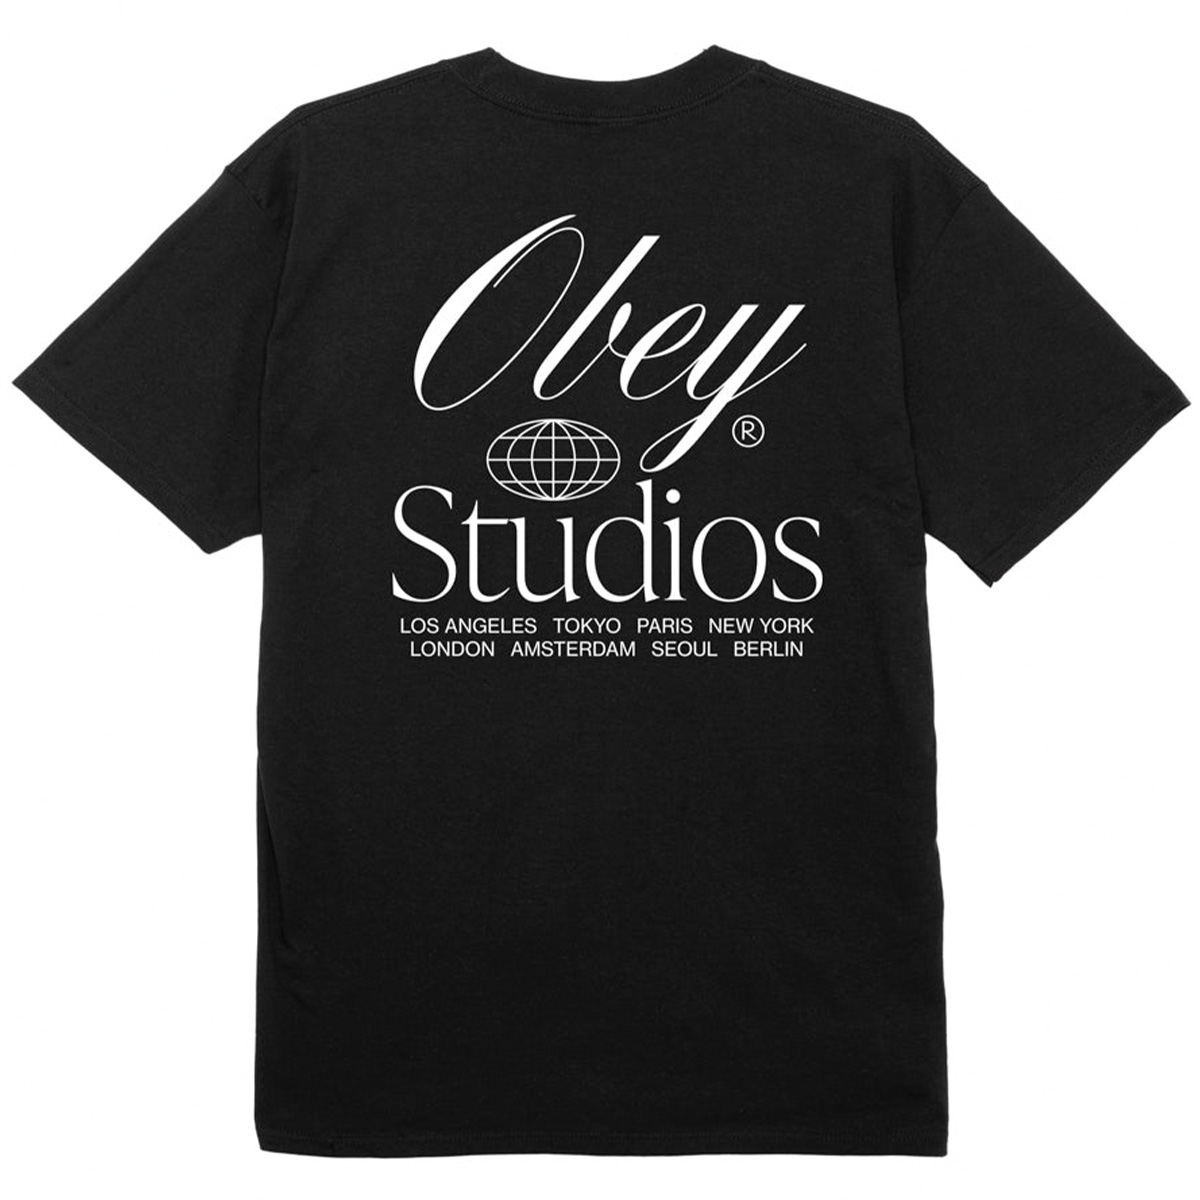 Obey Studios Worldwide T-Shirt Black